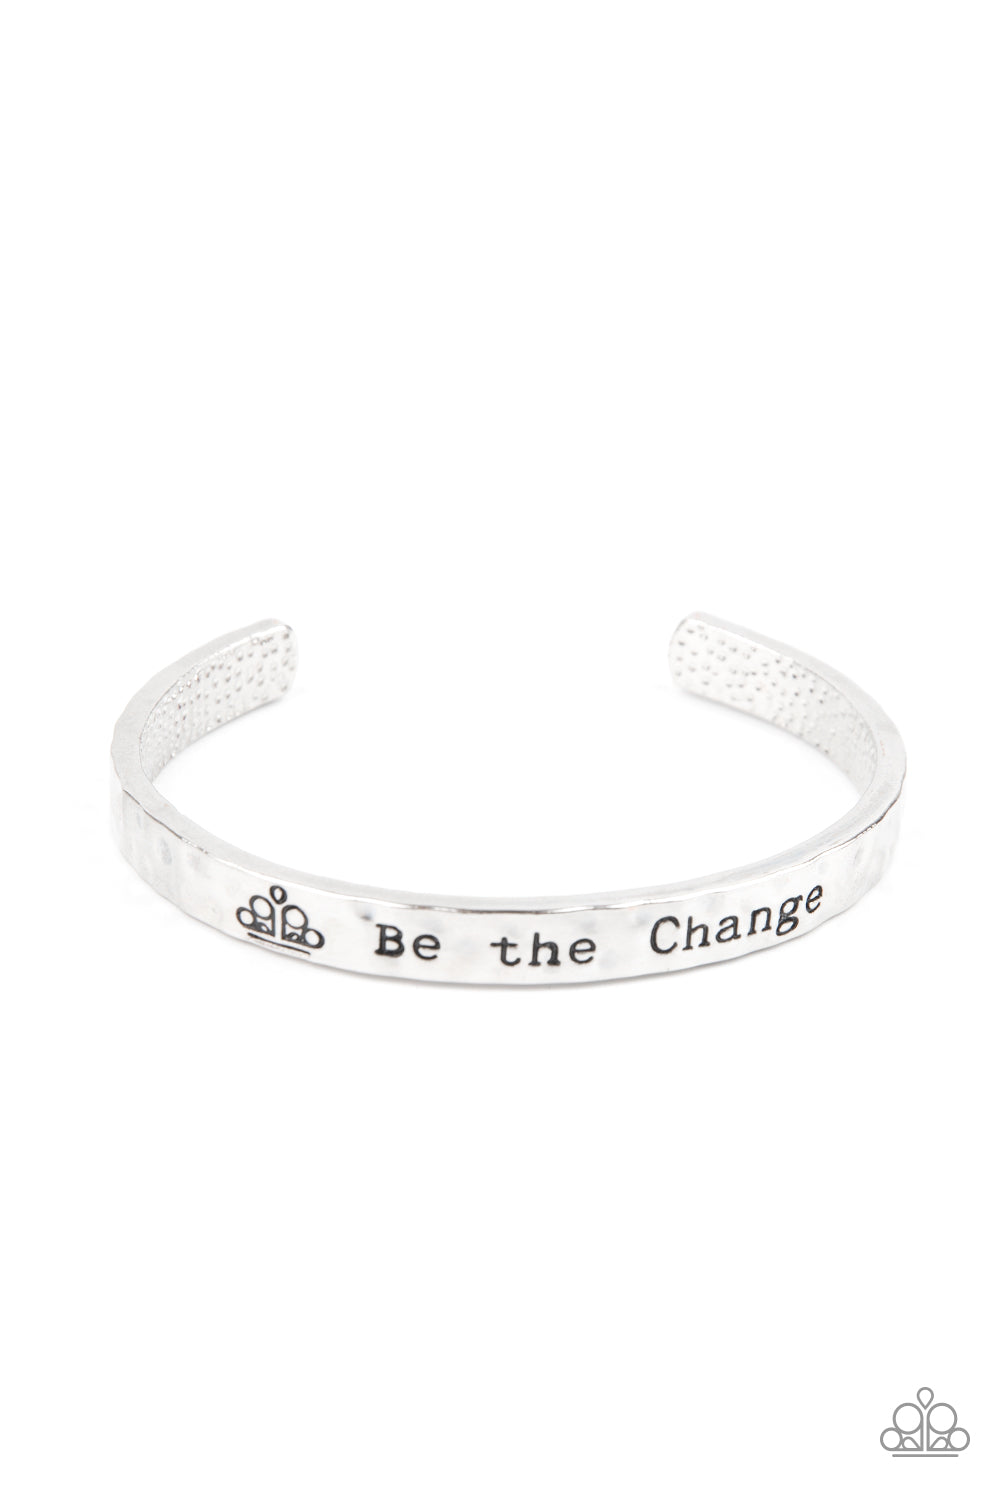 Be The Change Silver
Cuff Bracelet - Daria's Blings N Things